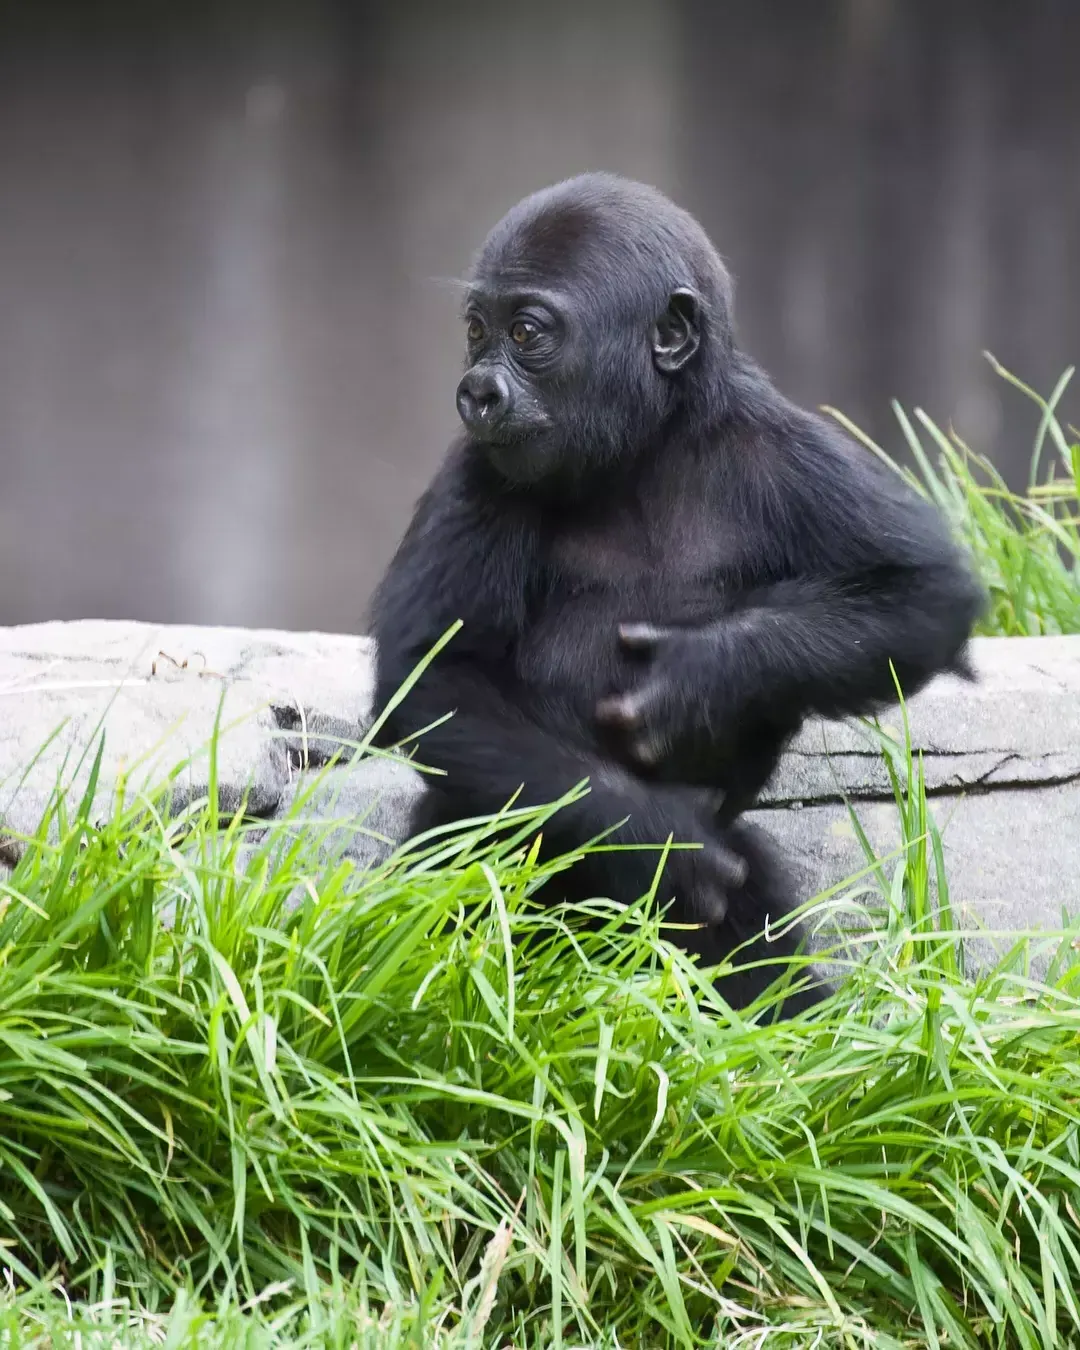 A baby gorilla at the 贝博体彩app动物园.